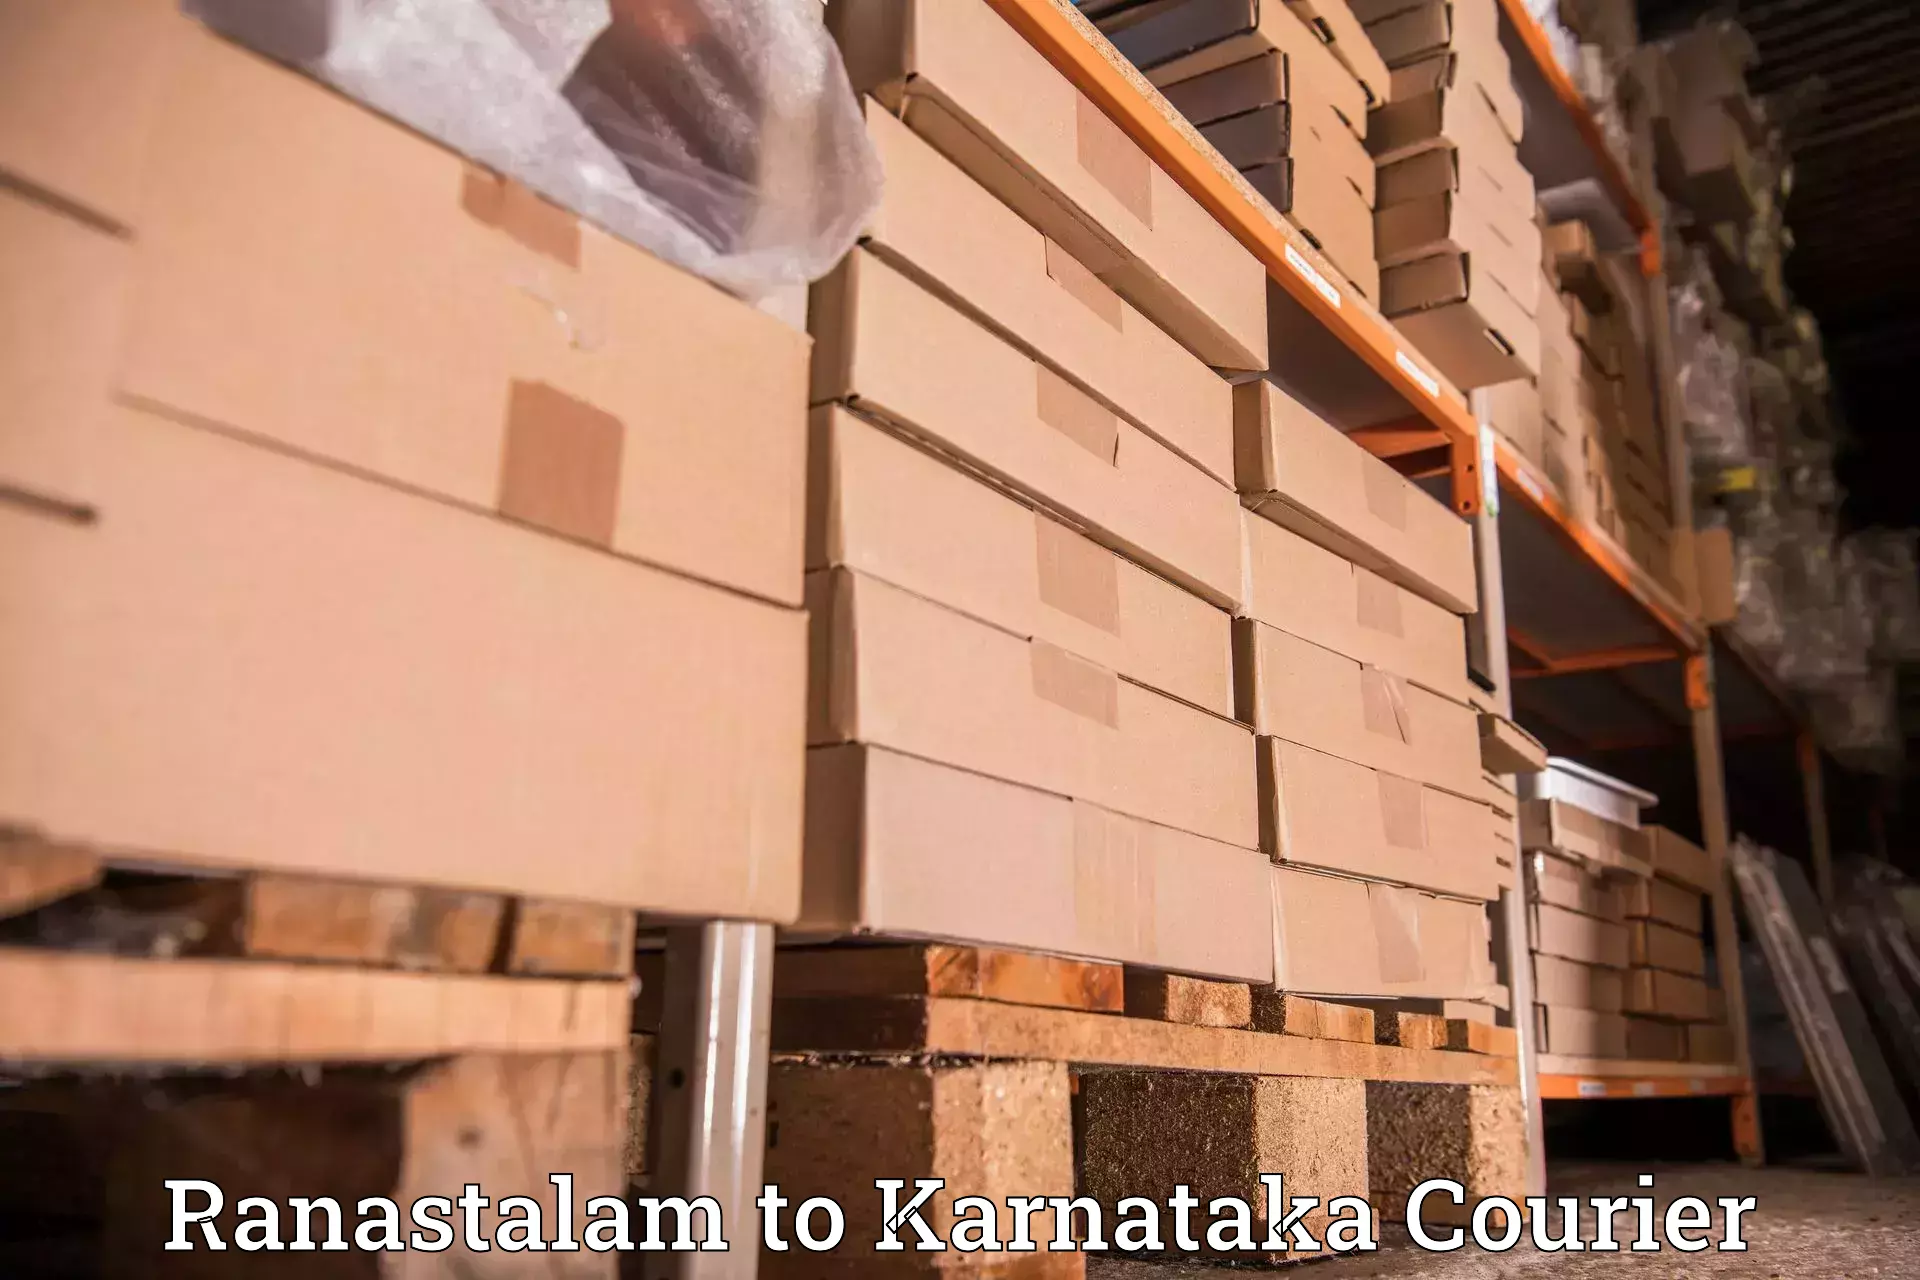 High-speed parcel service Ranastalam to Bangalore